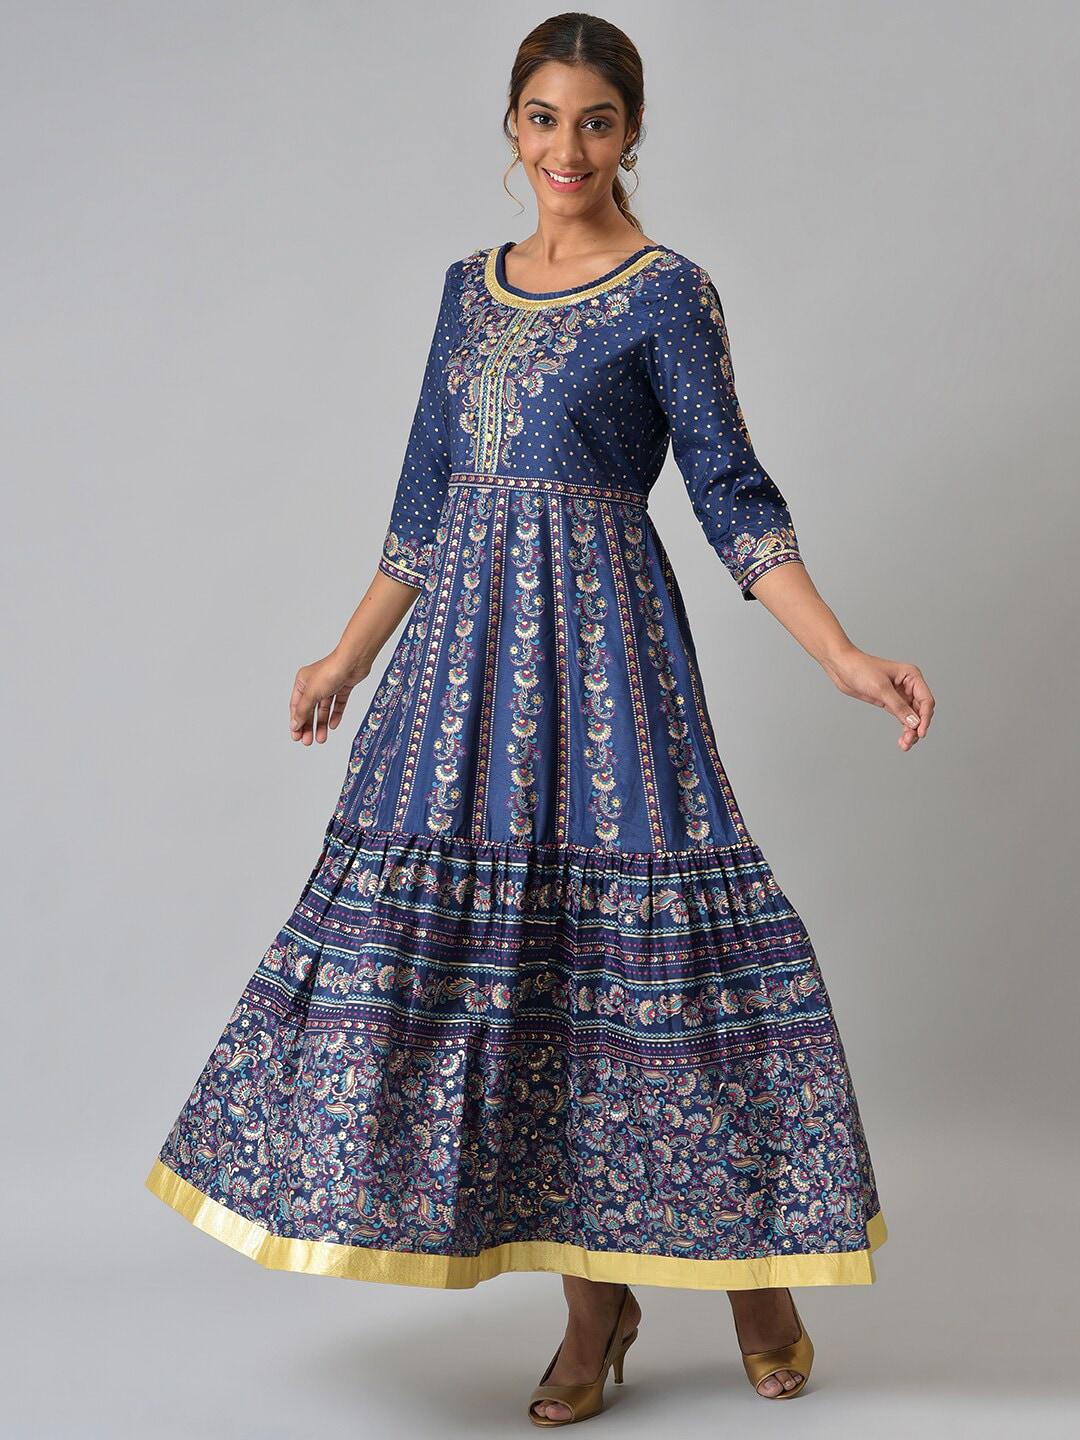 aurelia-navy-blue-ethnic-motifs-ethnic-maxi-dress